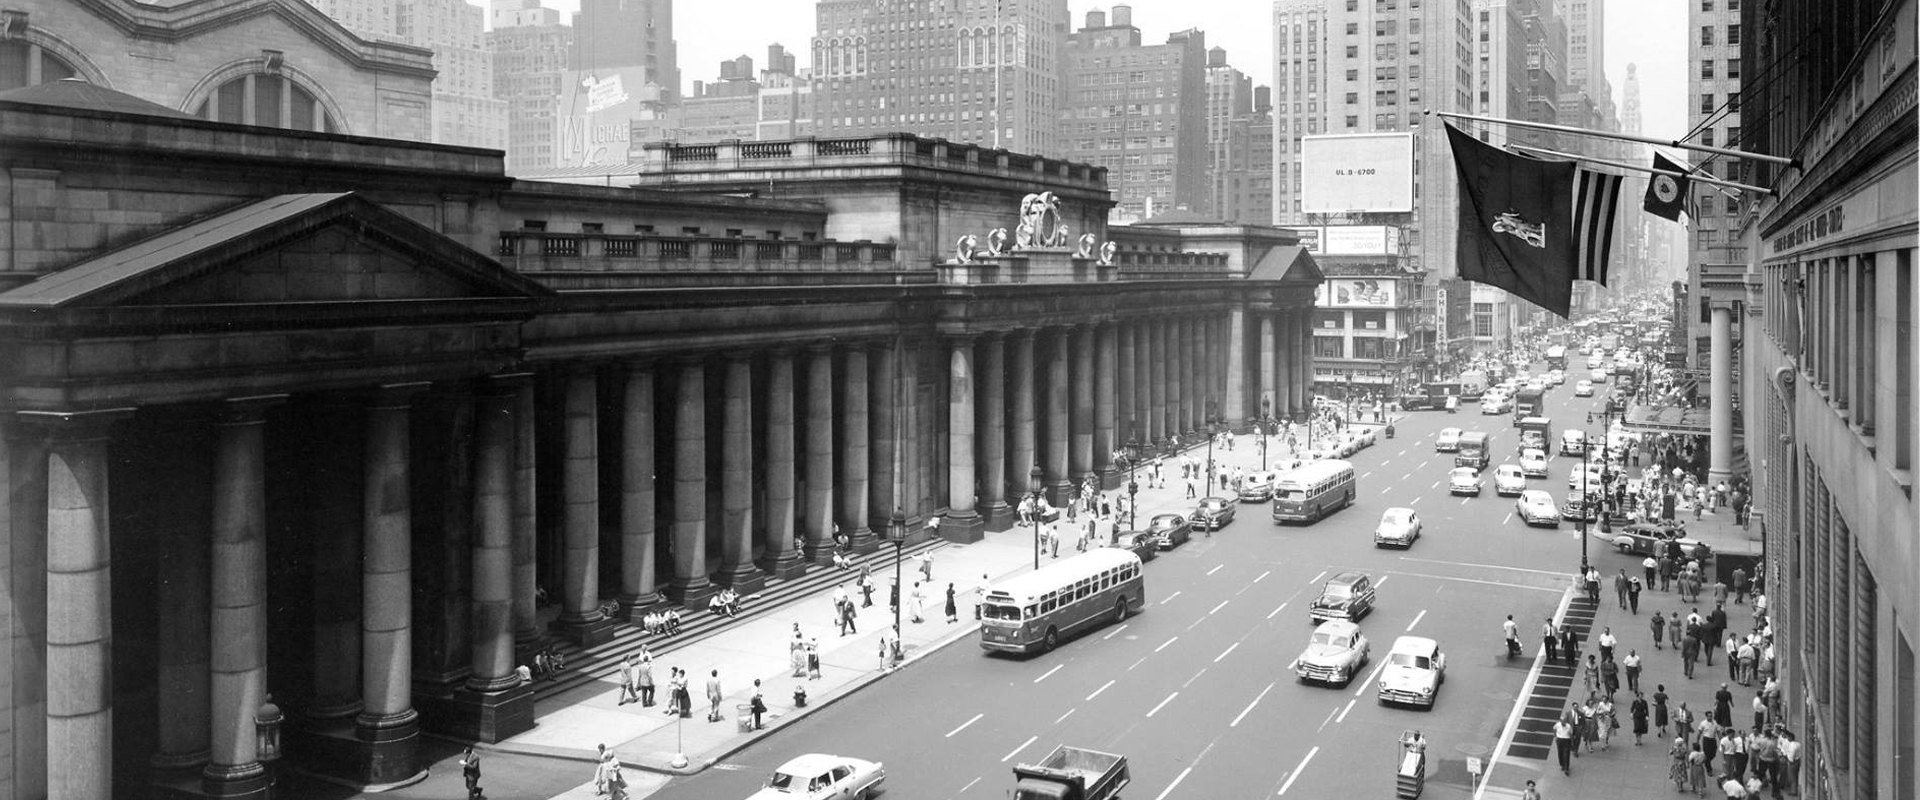 Archival Image of Penn Station